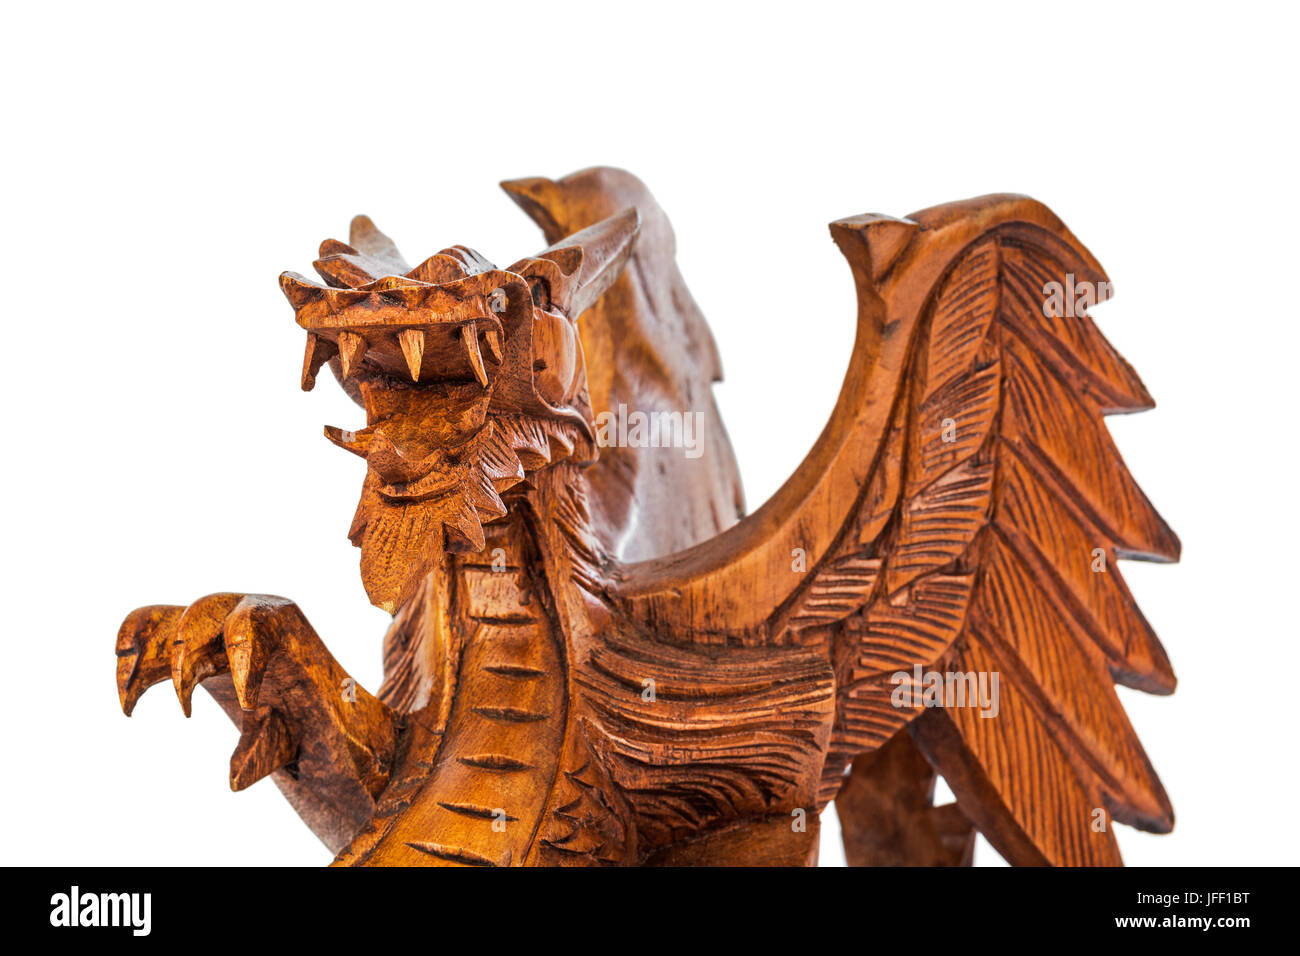 Toy wood dragon Stock Photo